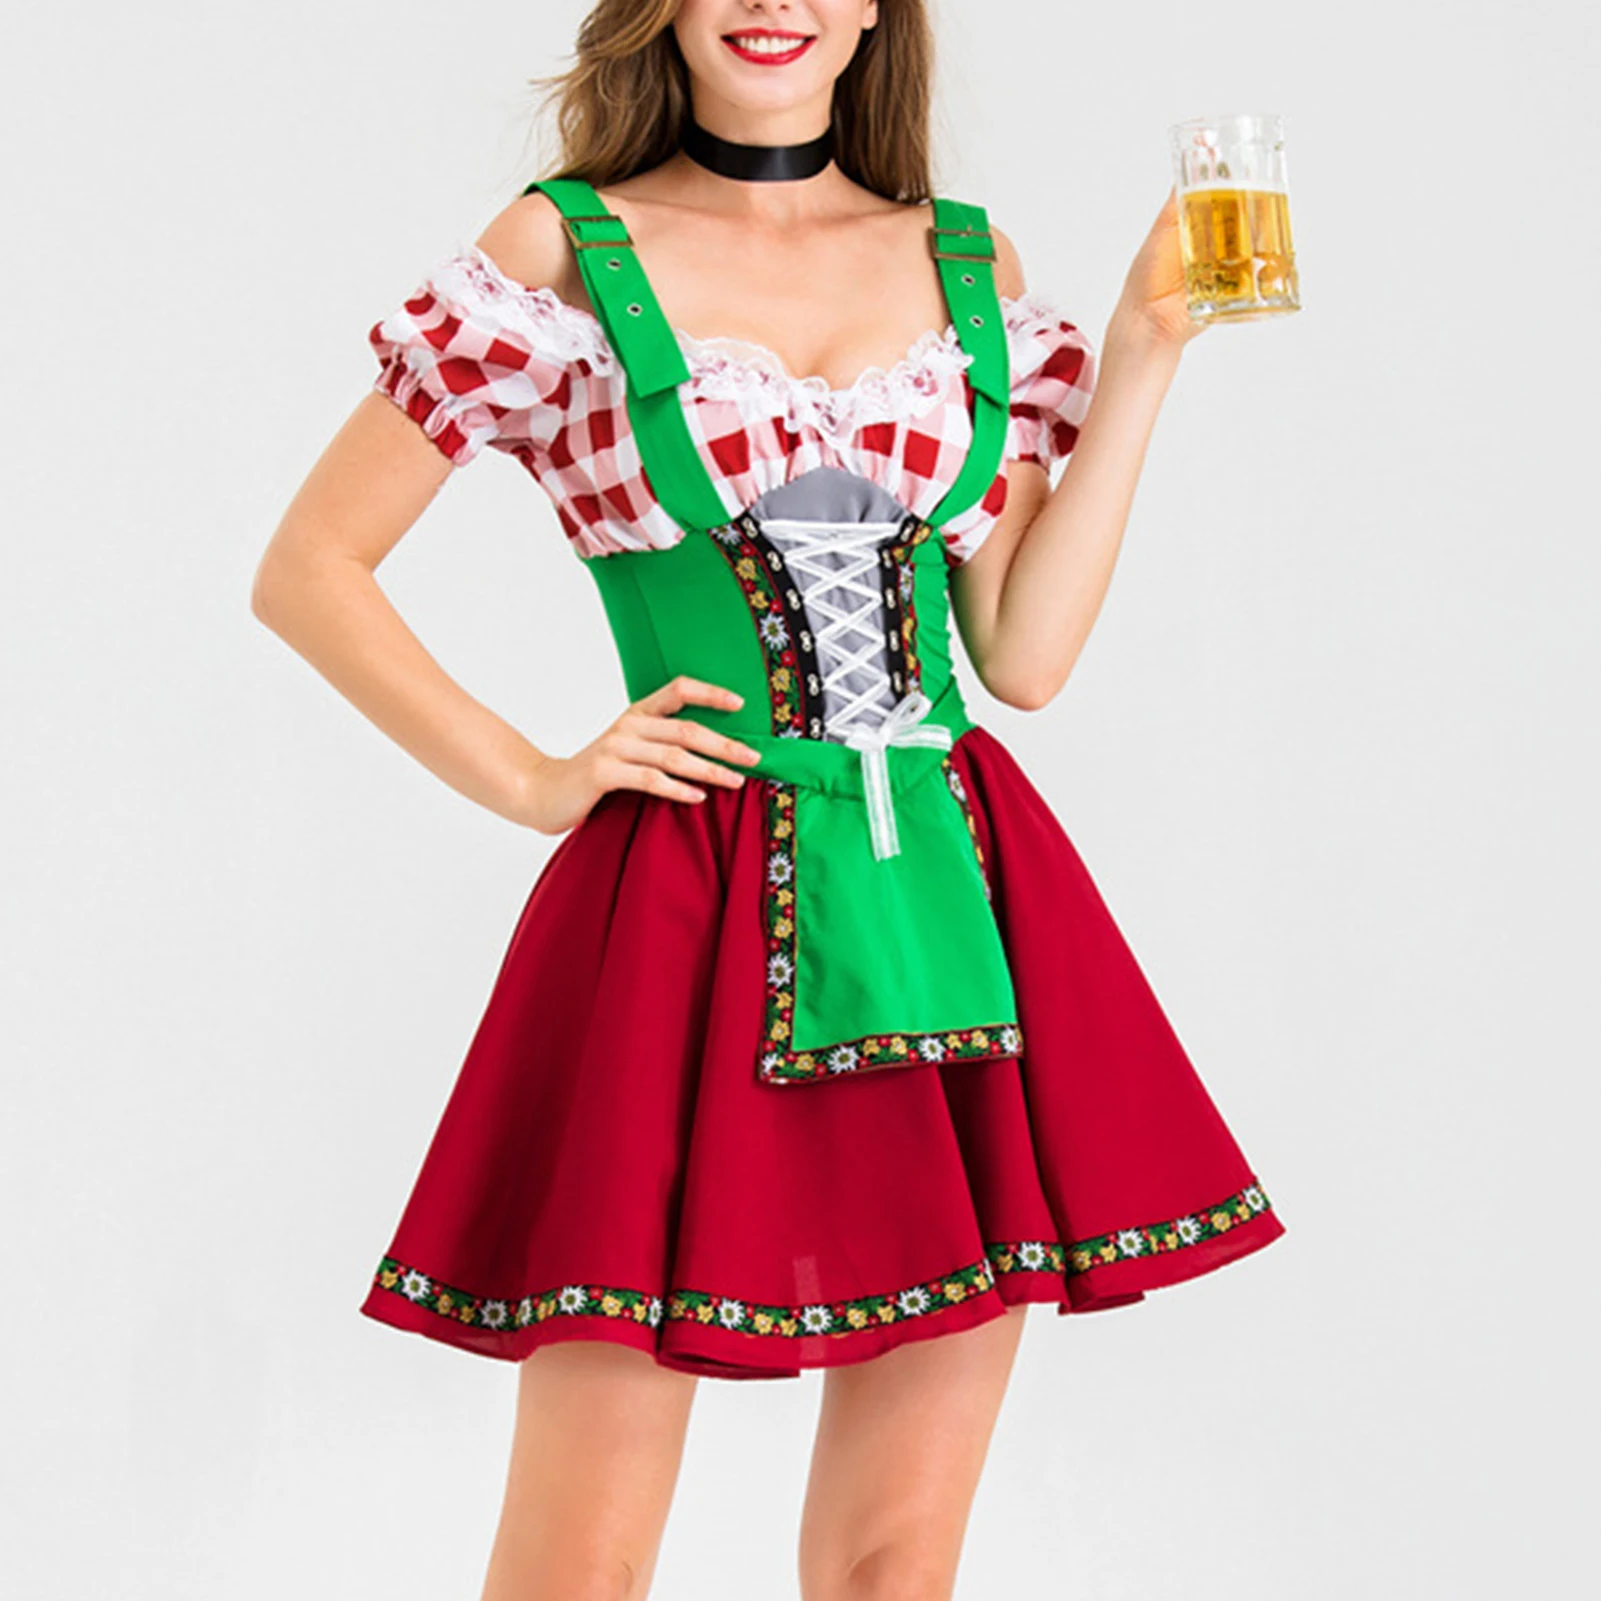 German Oktoberfest costume woman Halloween maid uniform bar waiter maid outfit cosplay clothing lady sexy Waiter dress